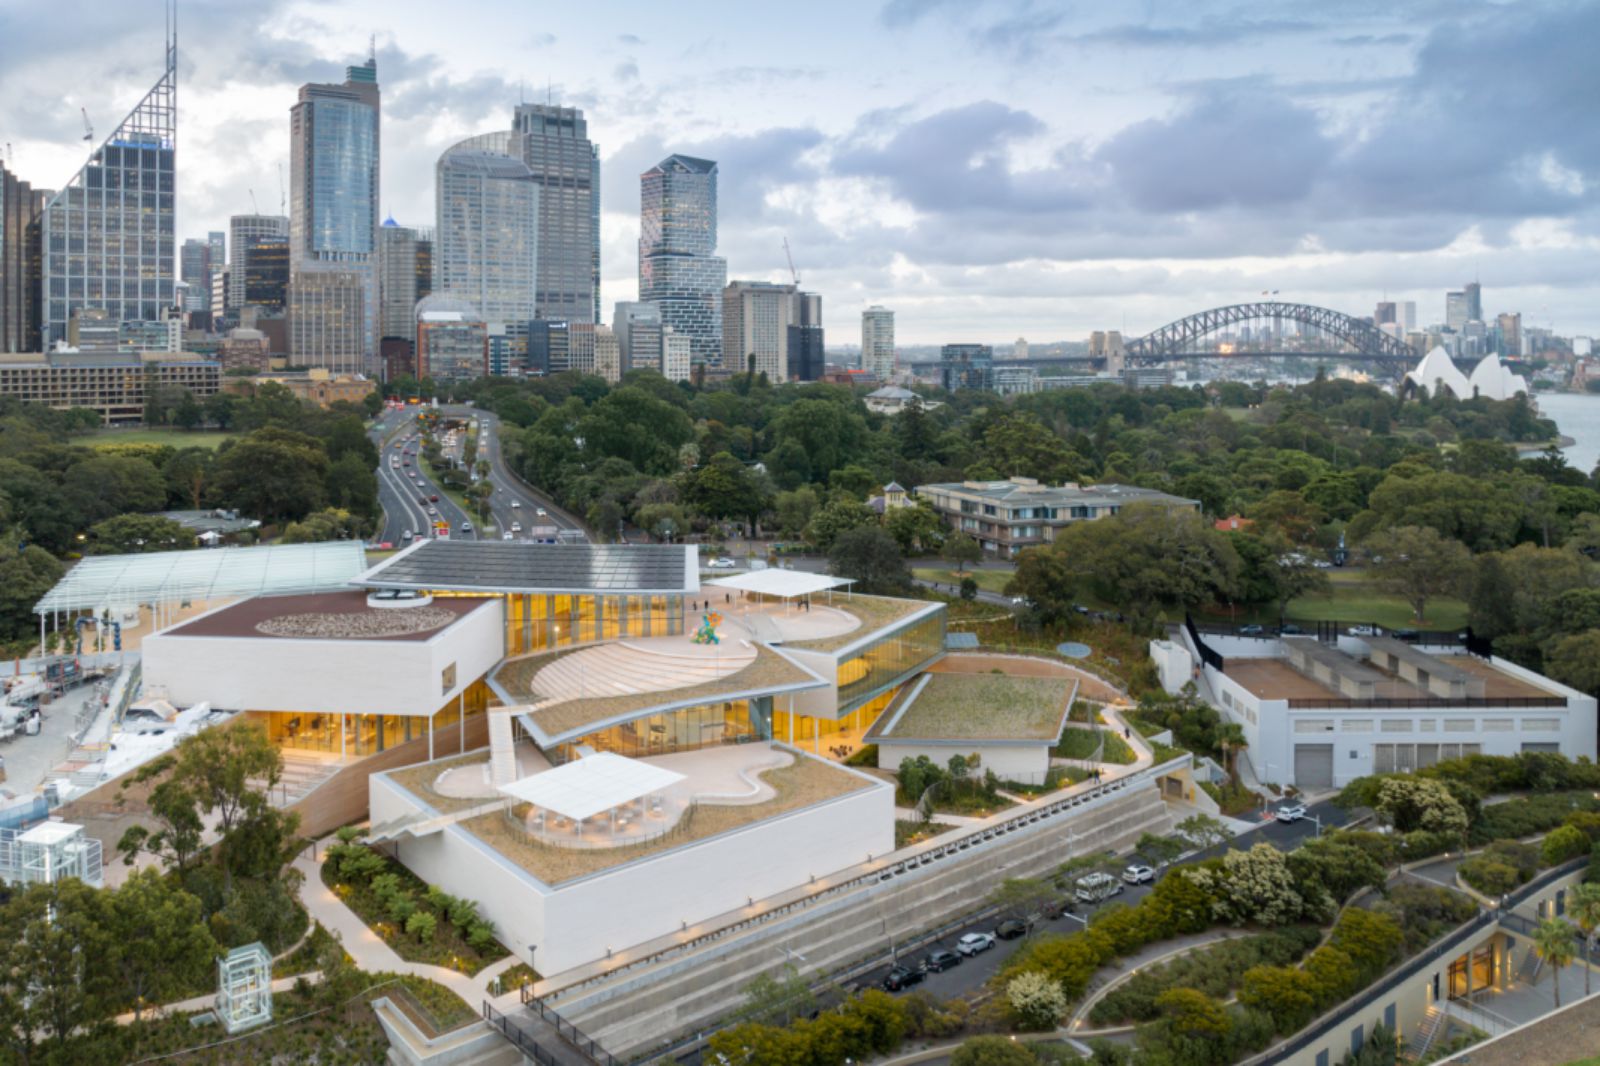 Sydney Modern Art Gallery